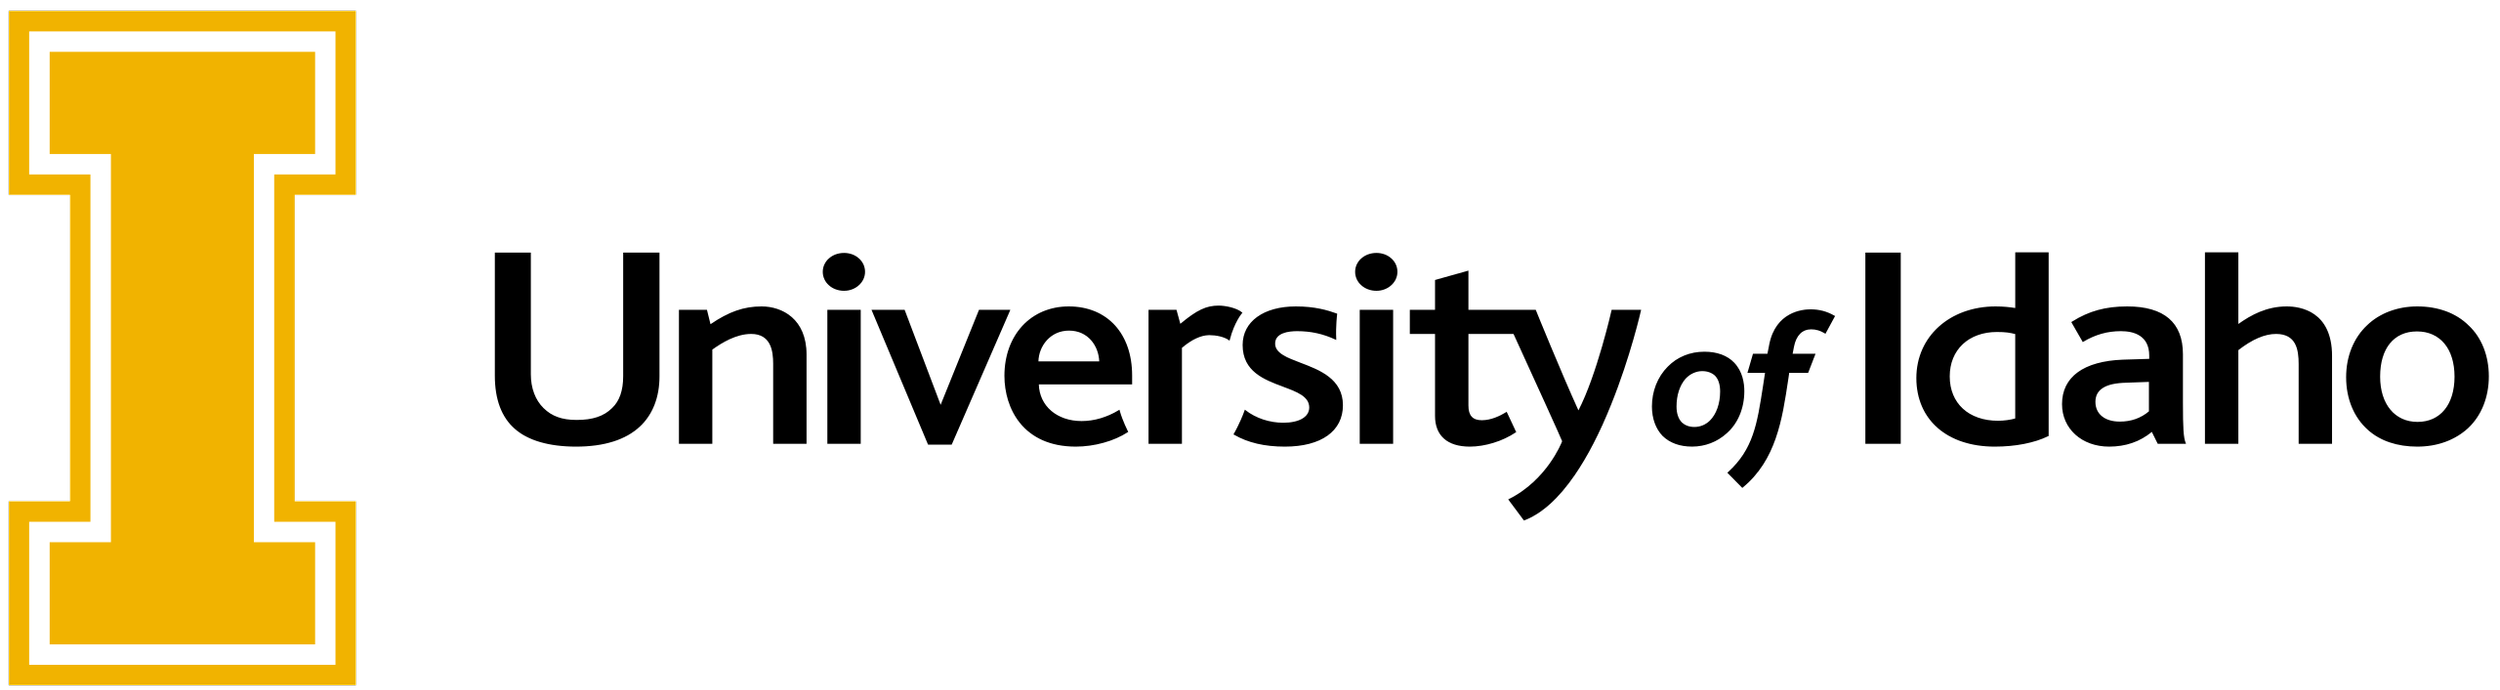 2560px-University_of_Idaho_logo.svg.png